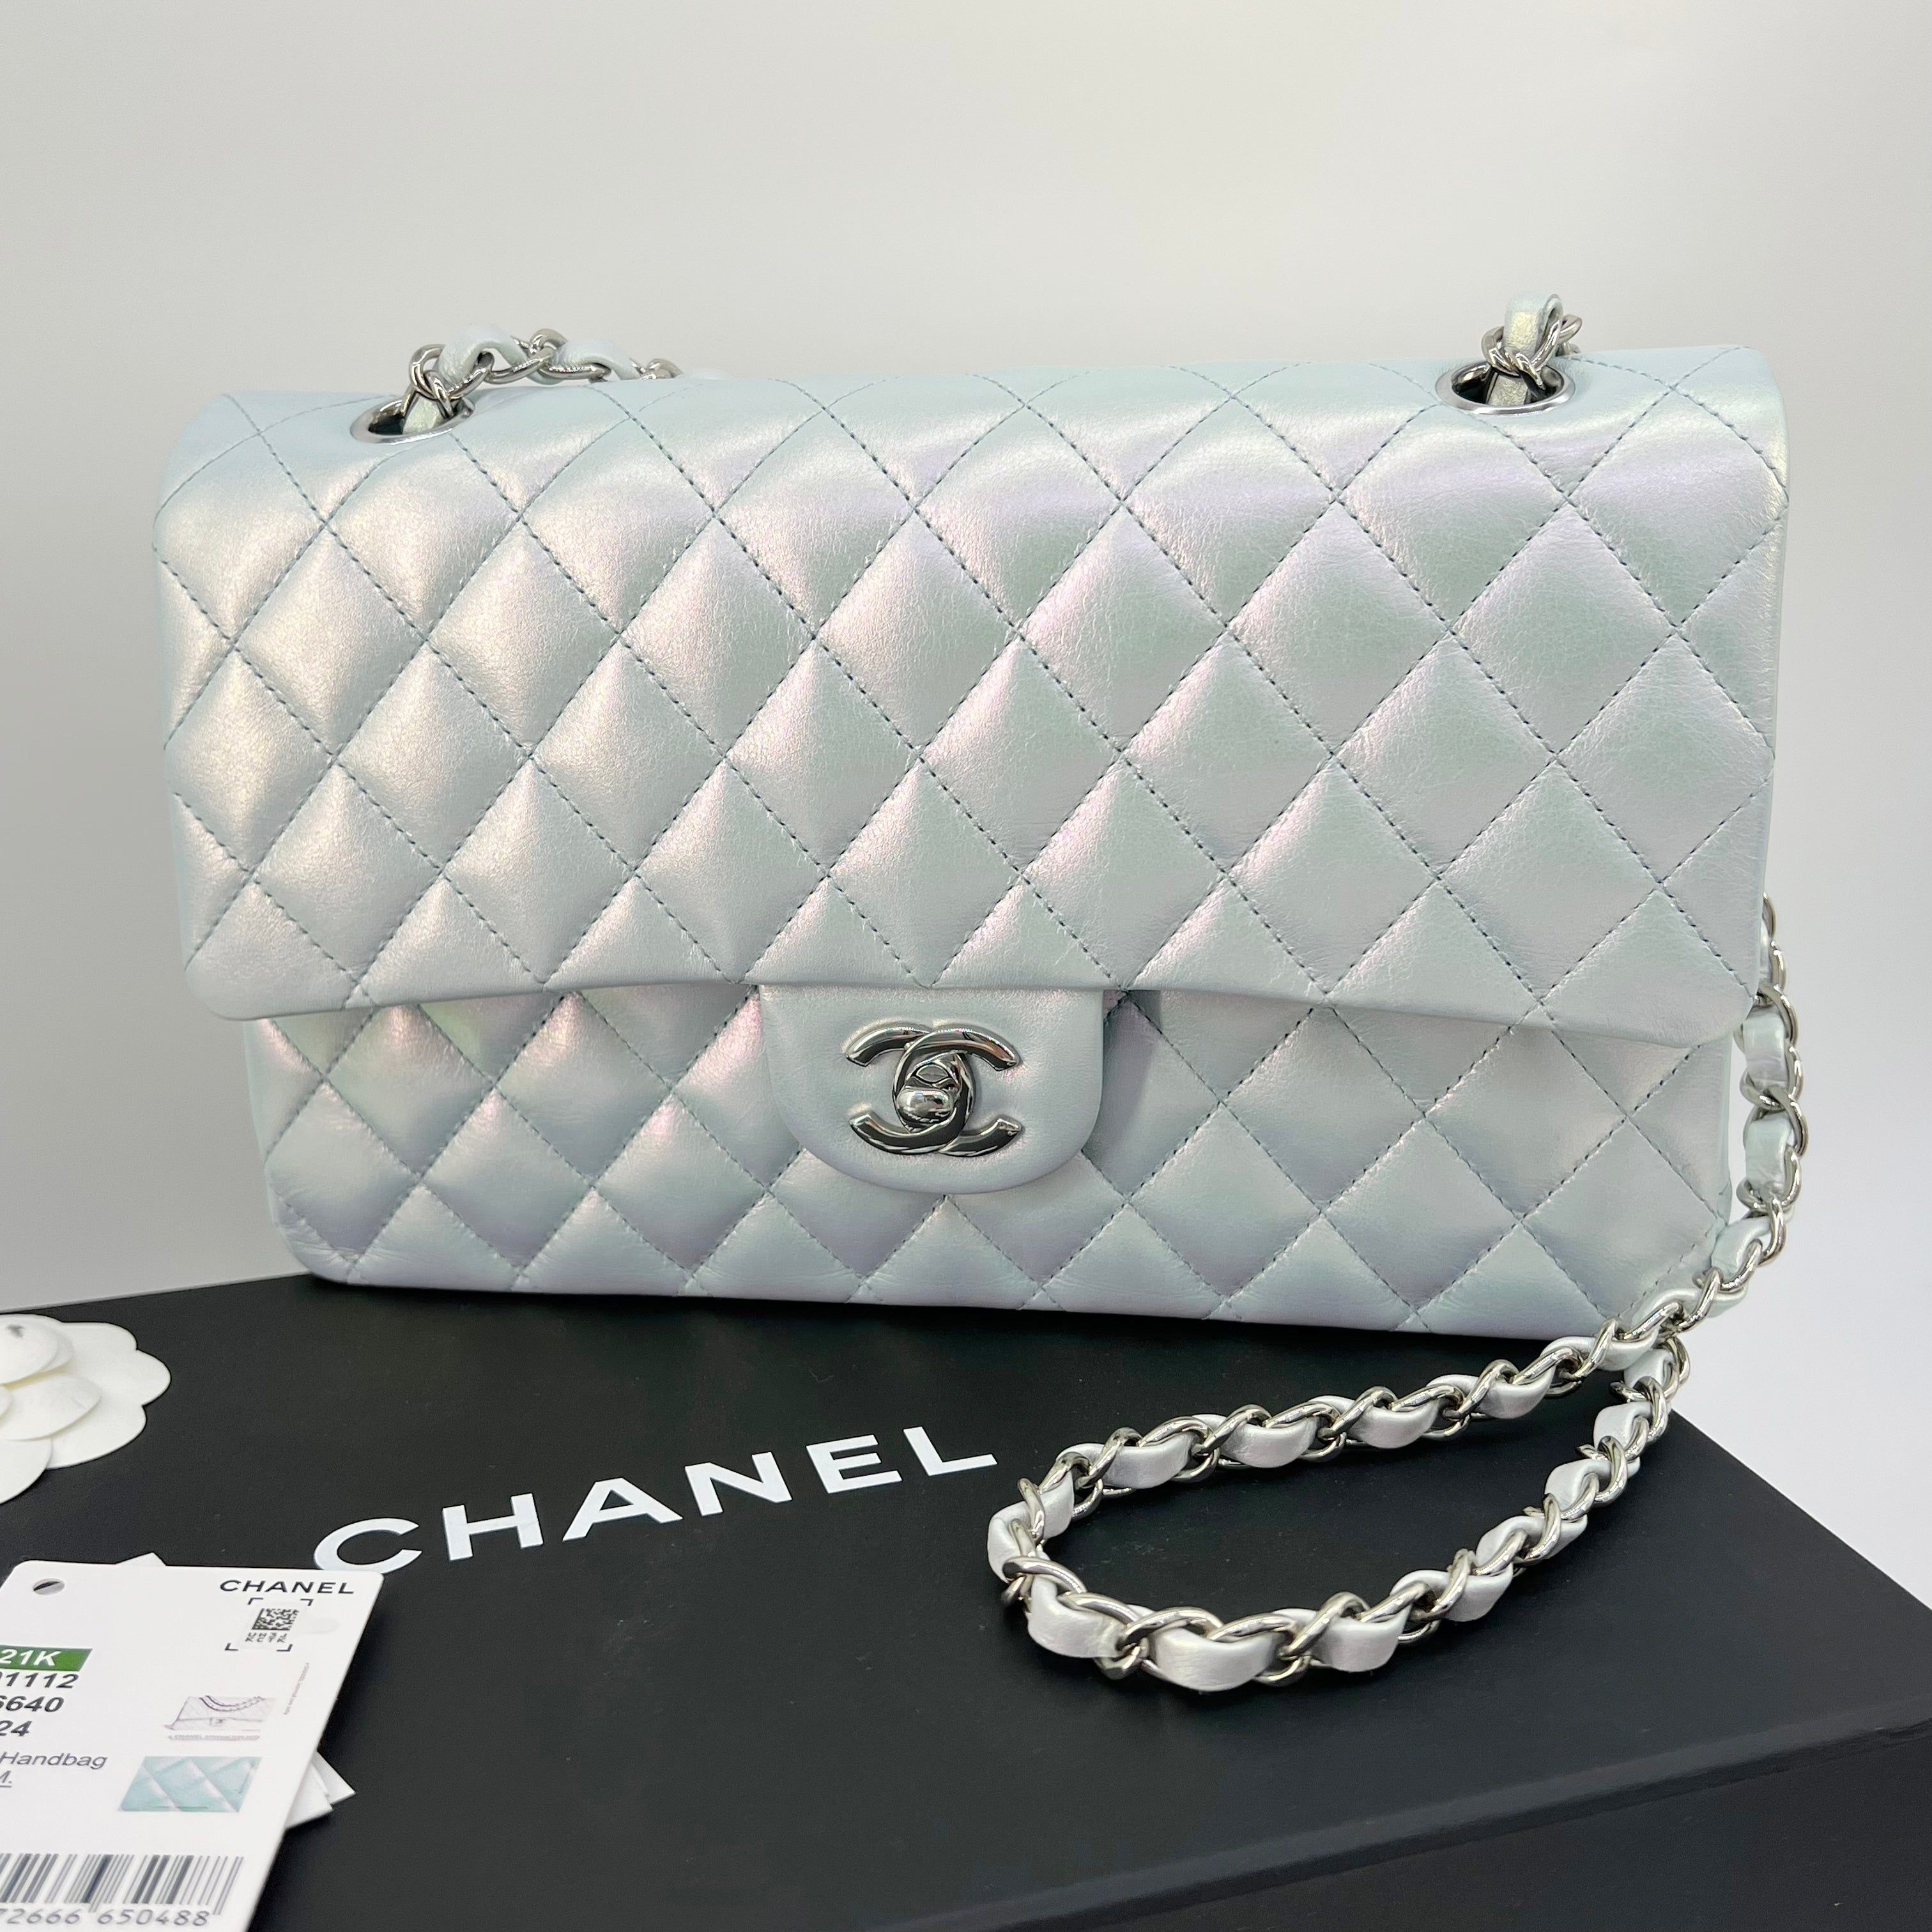 chanel handbags silver leather